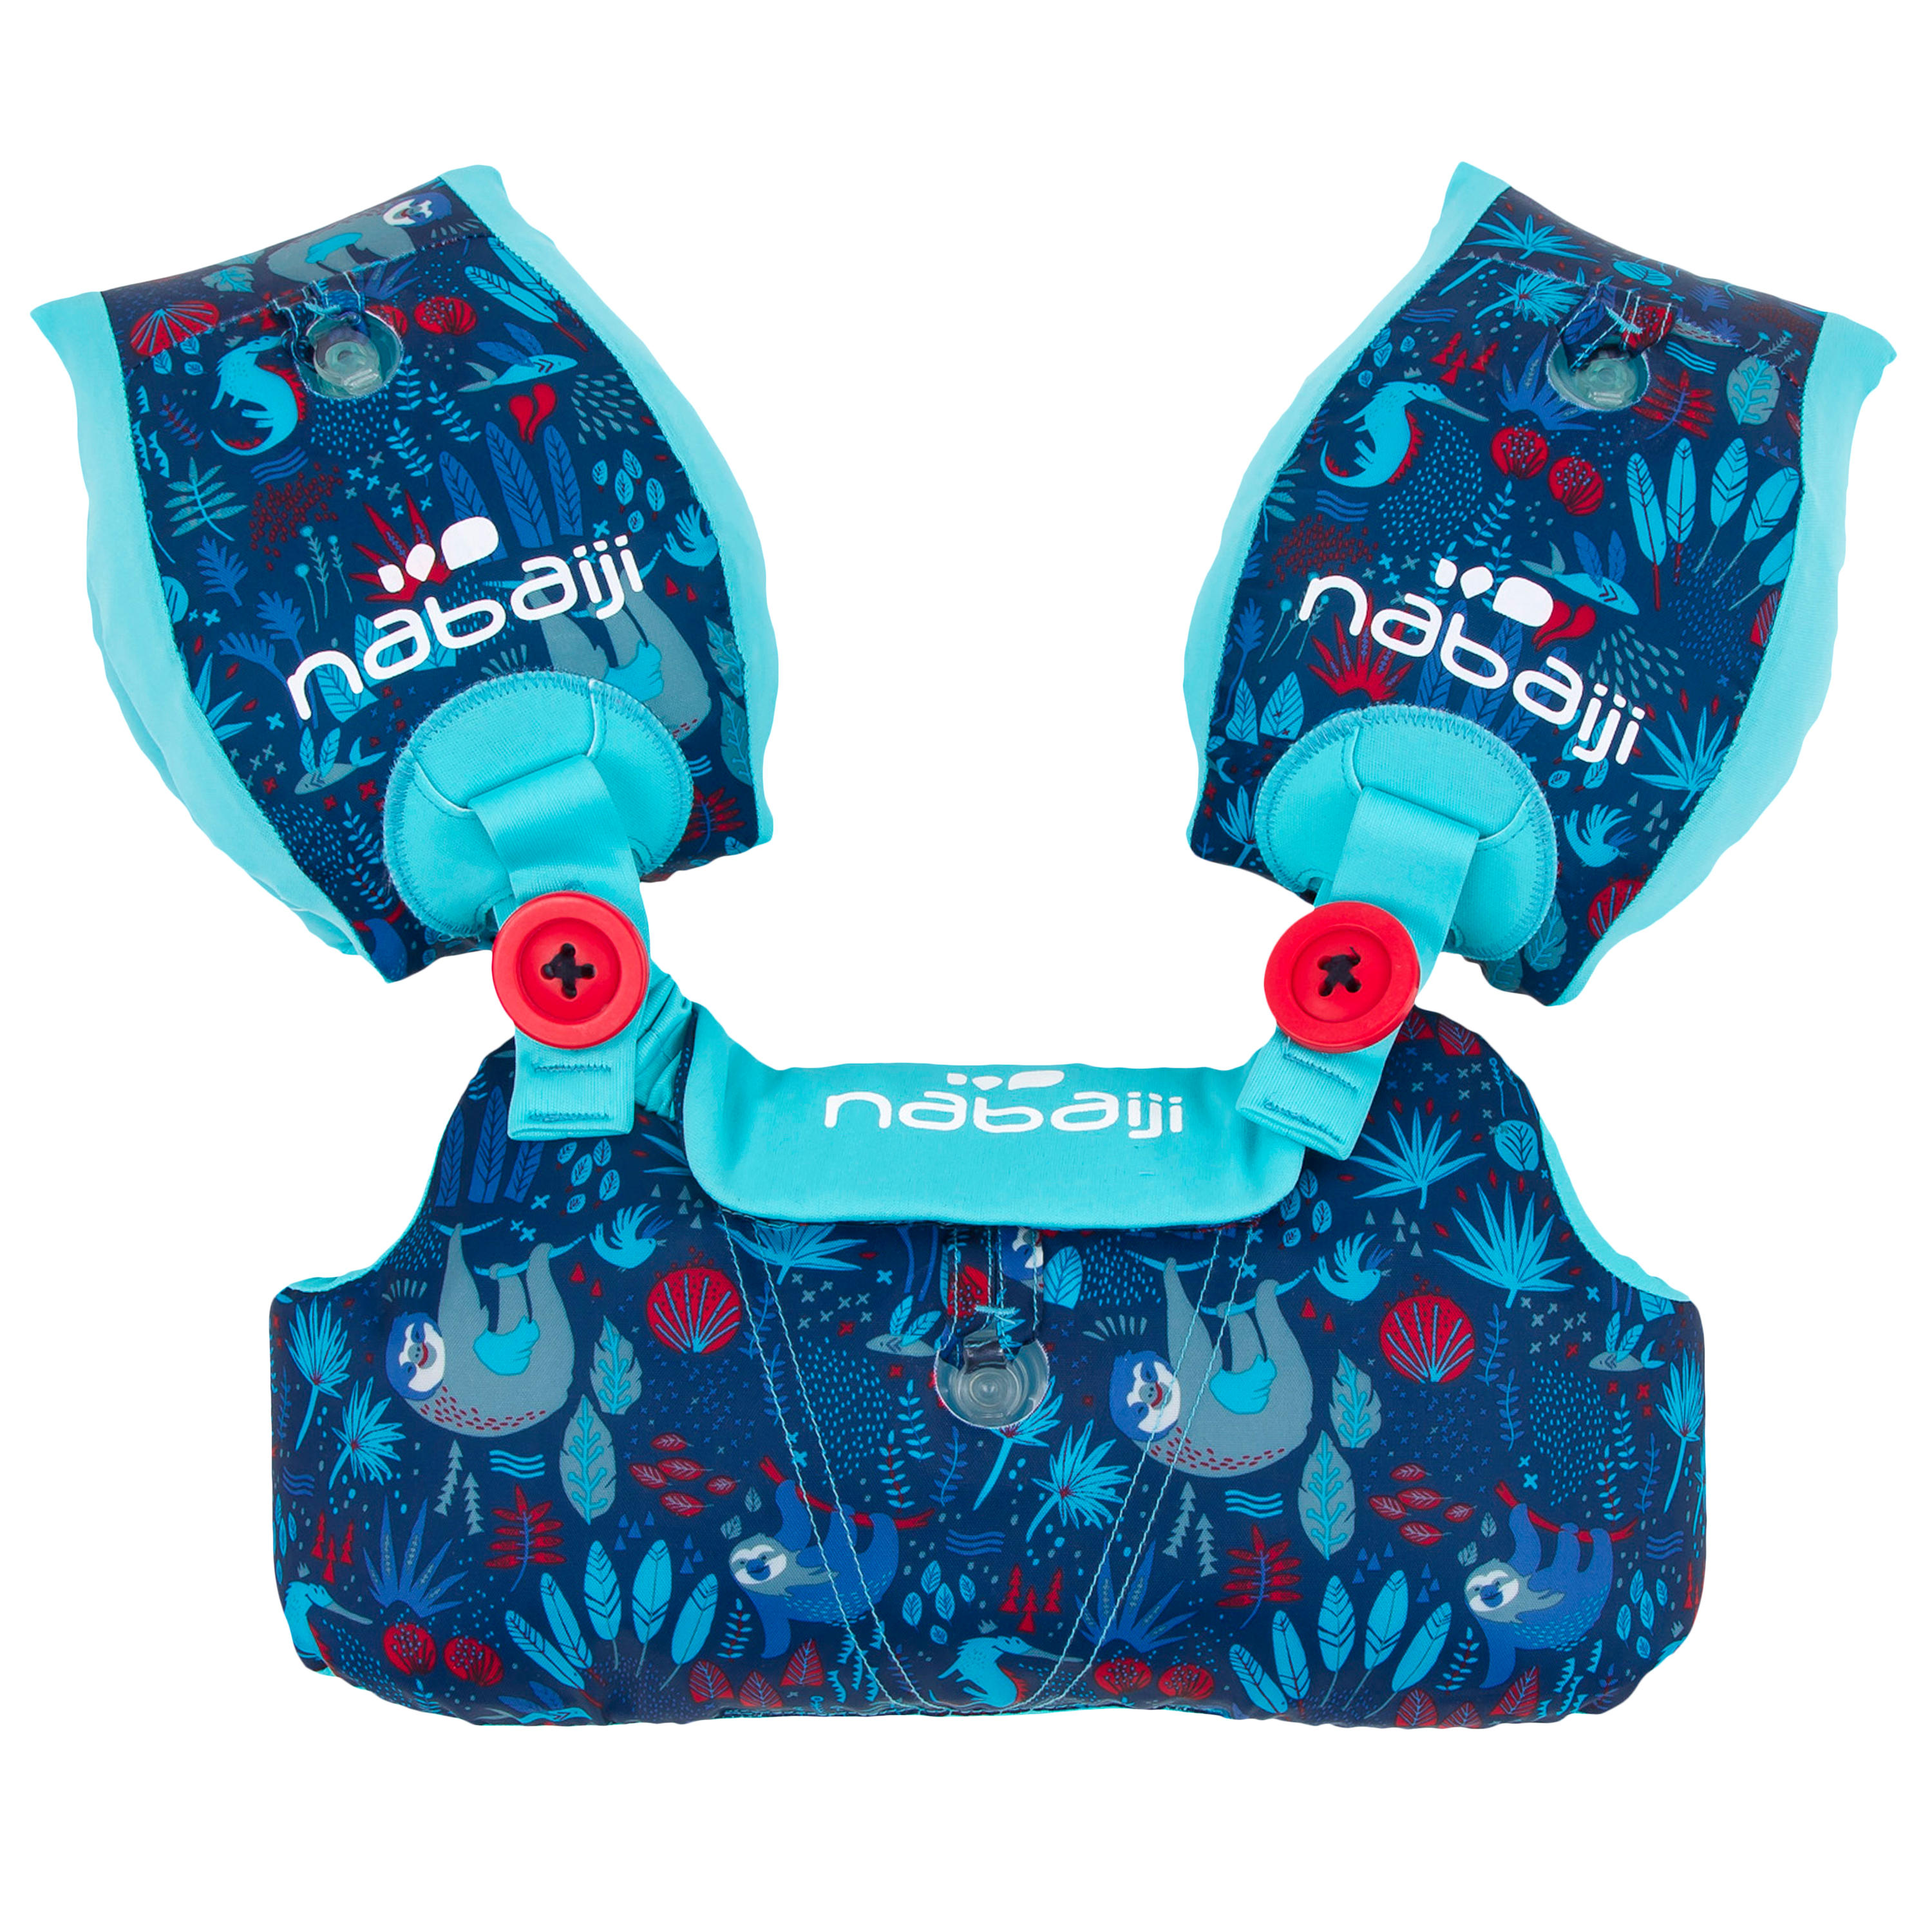 NABAIJI Child's TISWIM progressive swimming armbands-waistband - Blue "ALL SLOTH" print